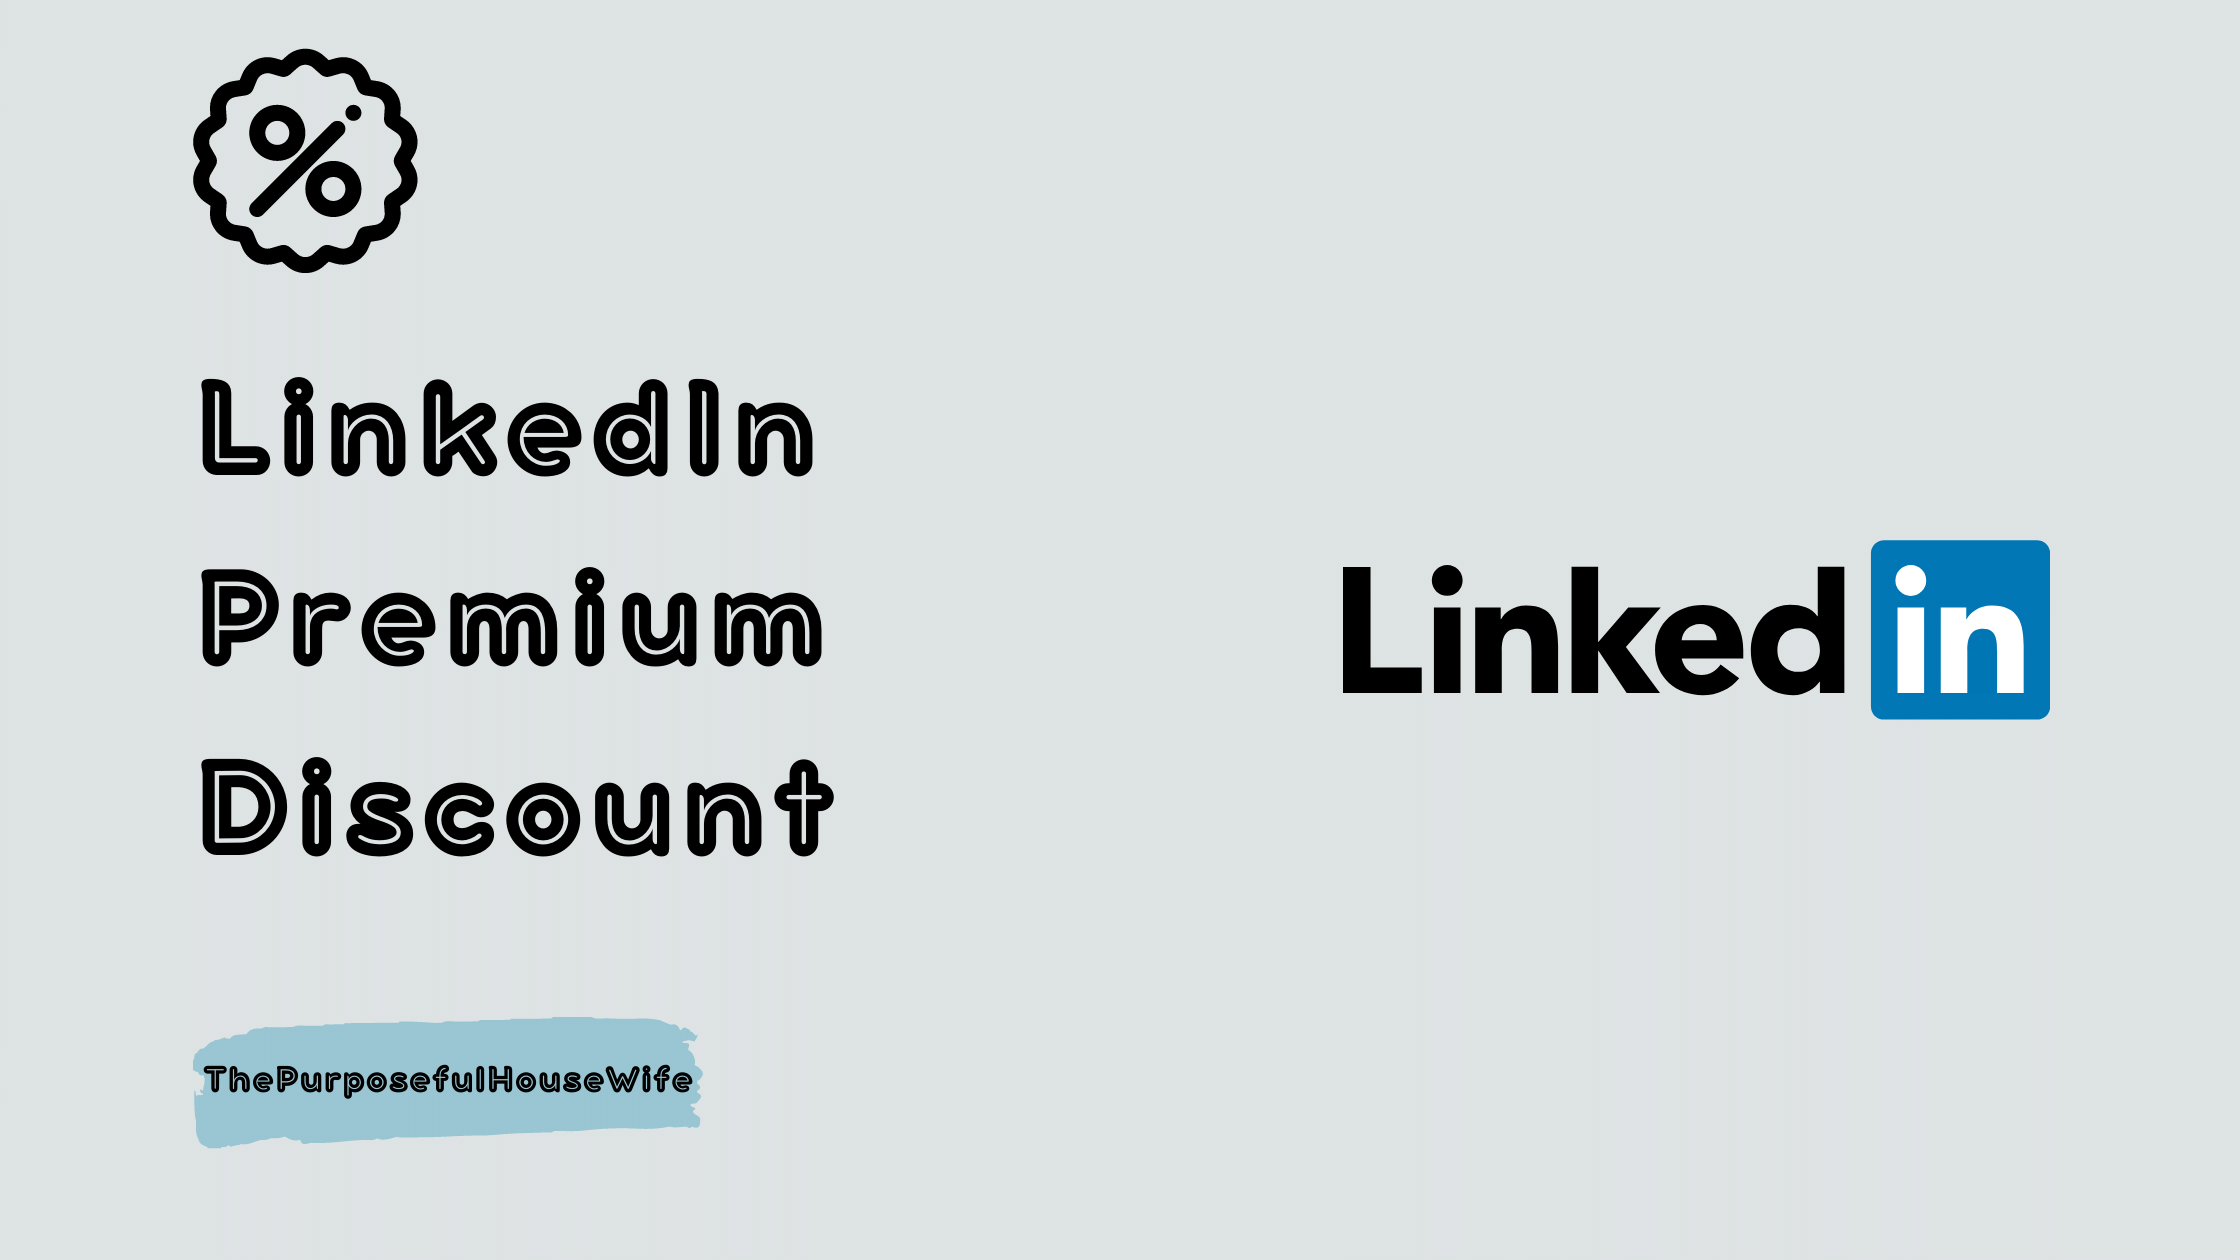 LinkedIn Premium Discount - ThePurposefulHouseWife